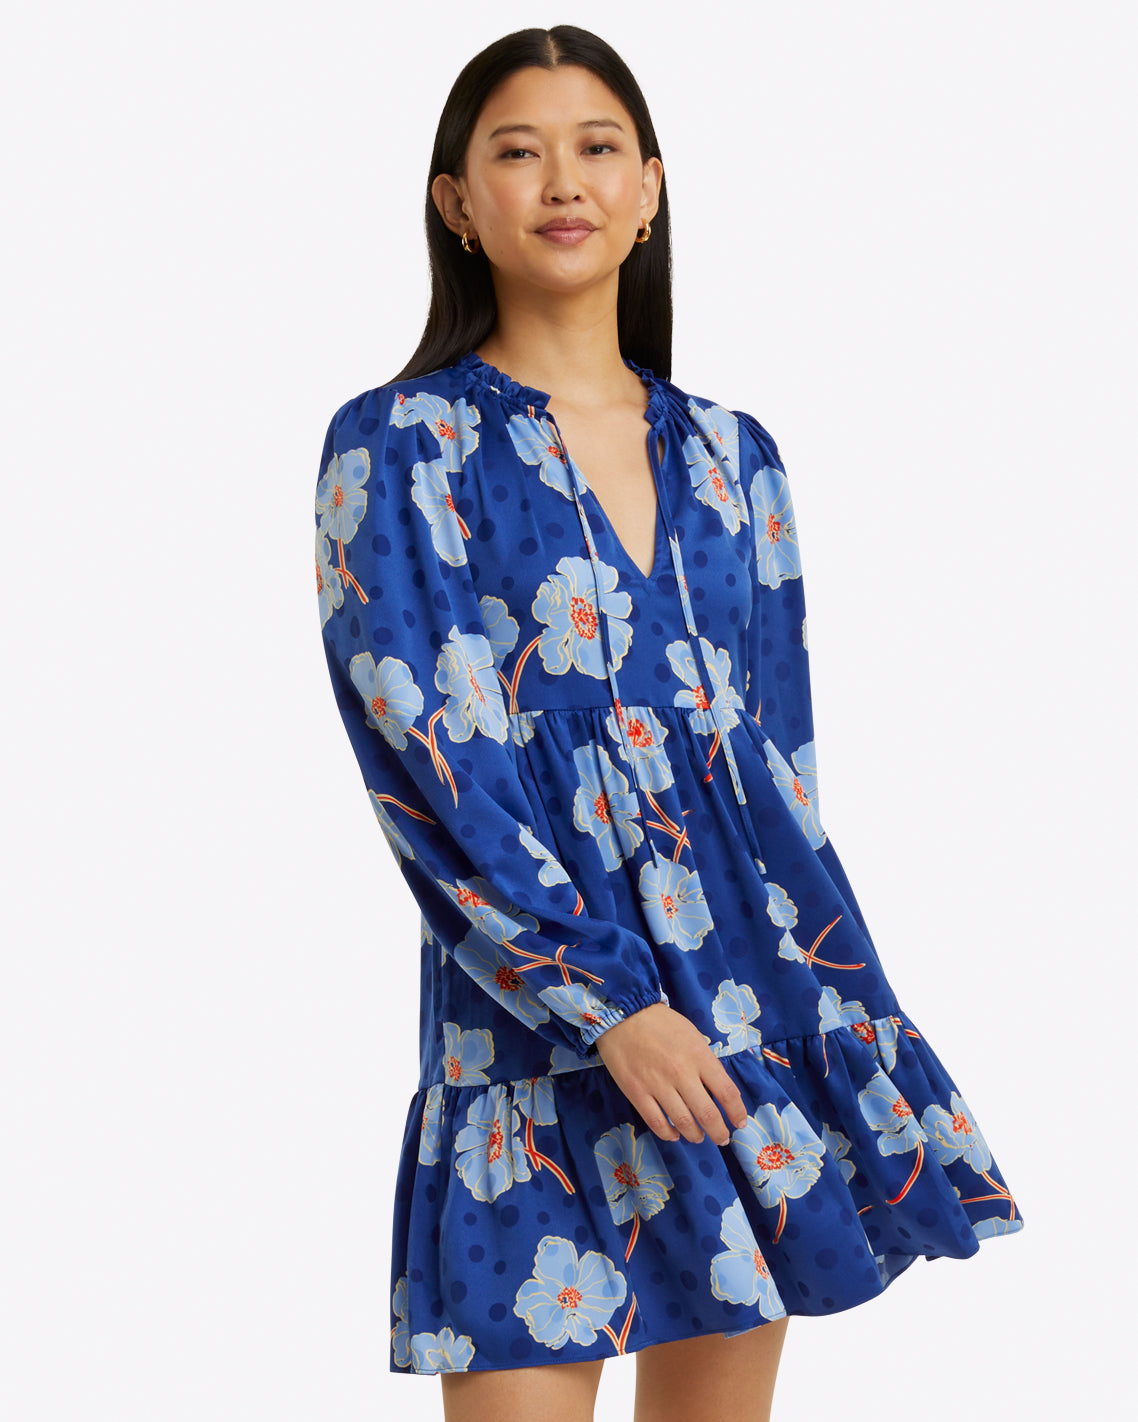 Connie Long Sleeve Mini Dress in Printed Dot Jacquard